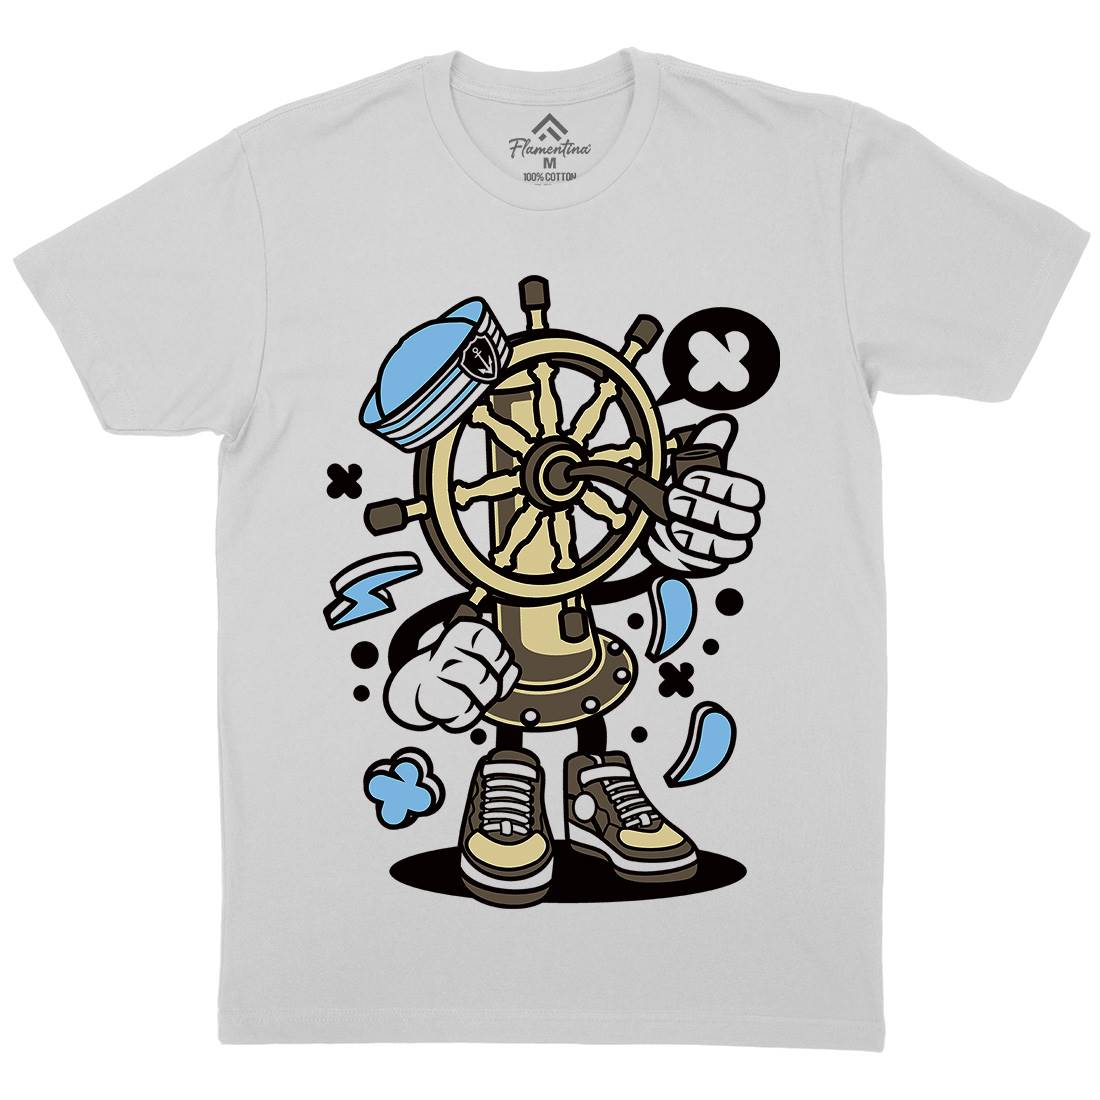 Ships Wheel Mens Crew Neck T-Shirt Navy C228